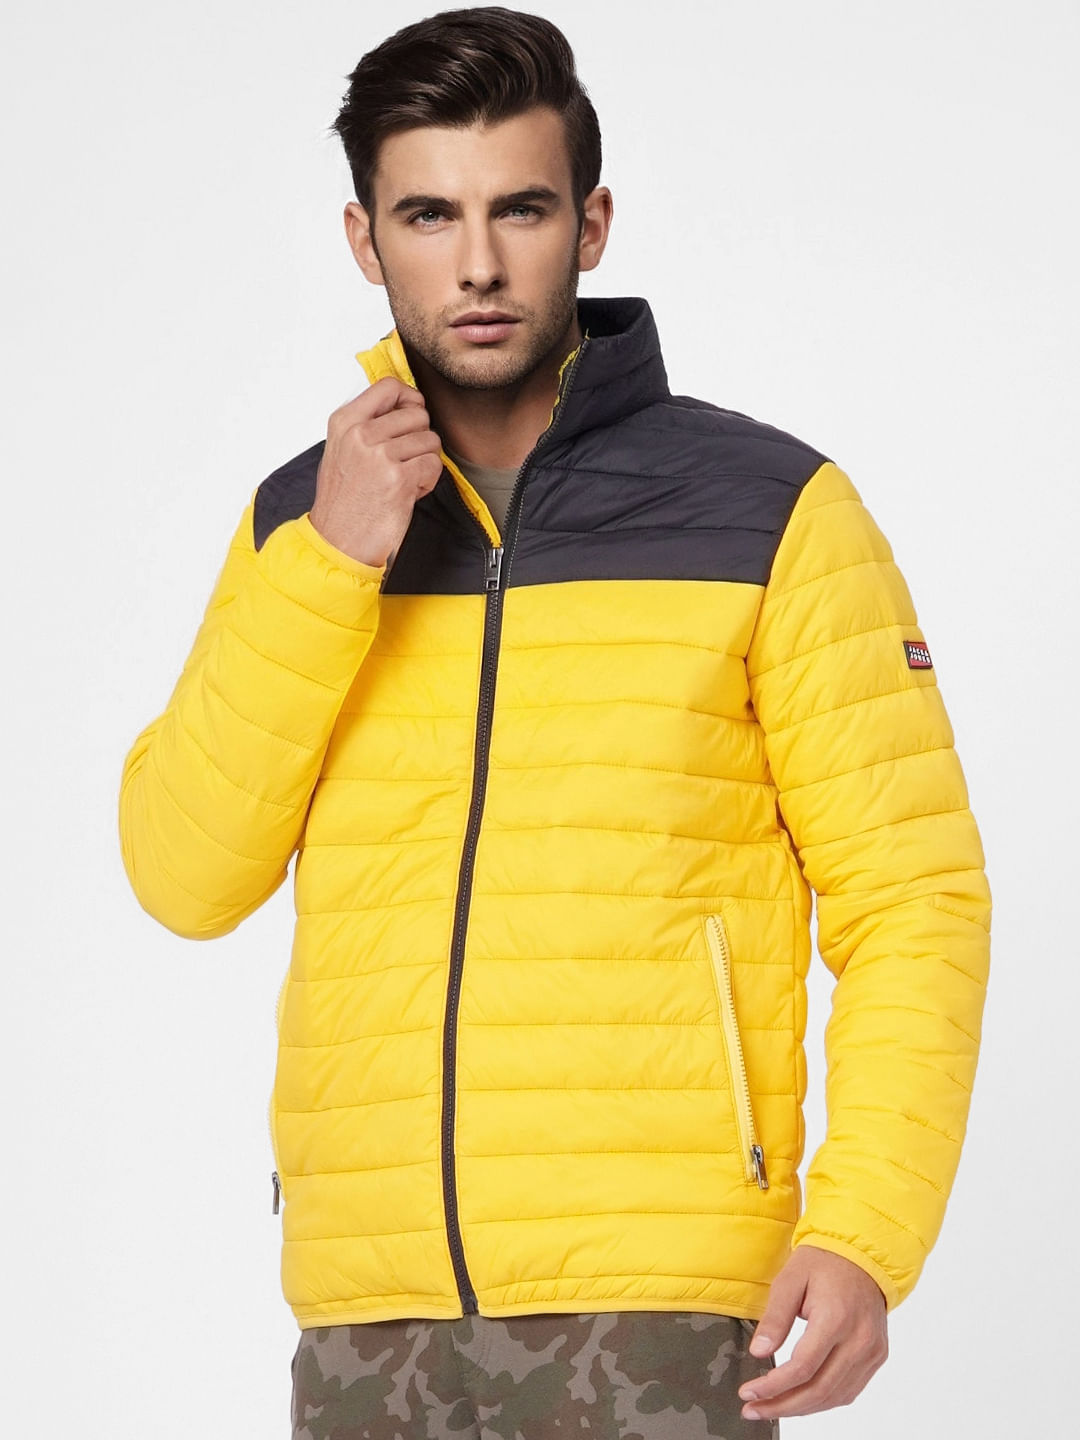 Jack & Jones jacket Gray M discount 56% MEN FASHION Jackets Sports 